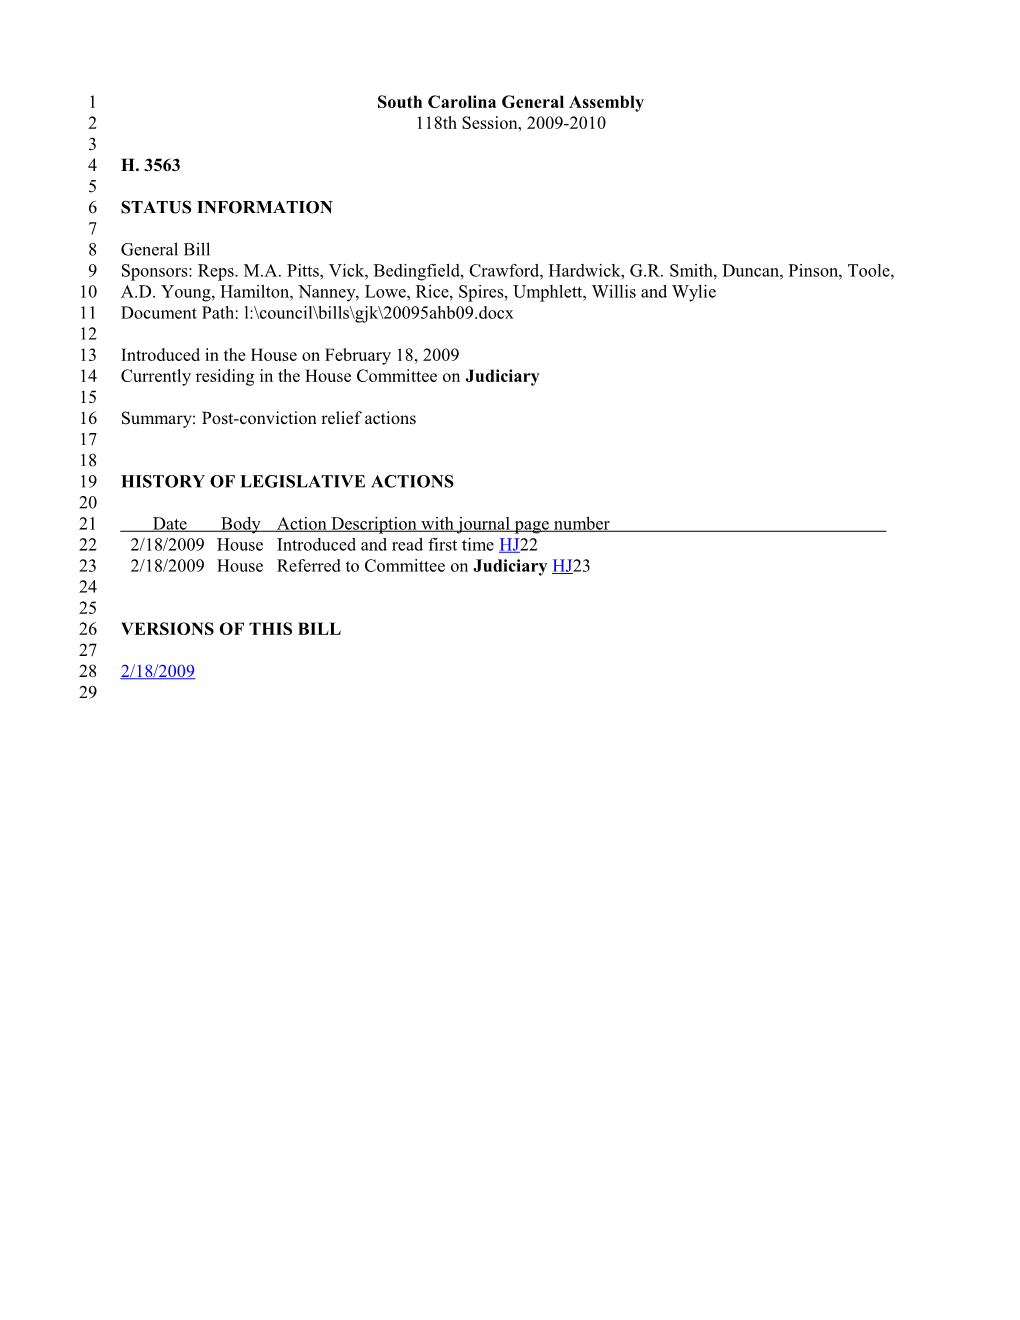 2009-2010 Bill 3563: Post-Conviction Relief Actions - South Carolina Legislature Online